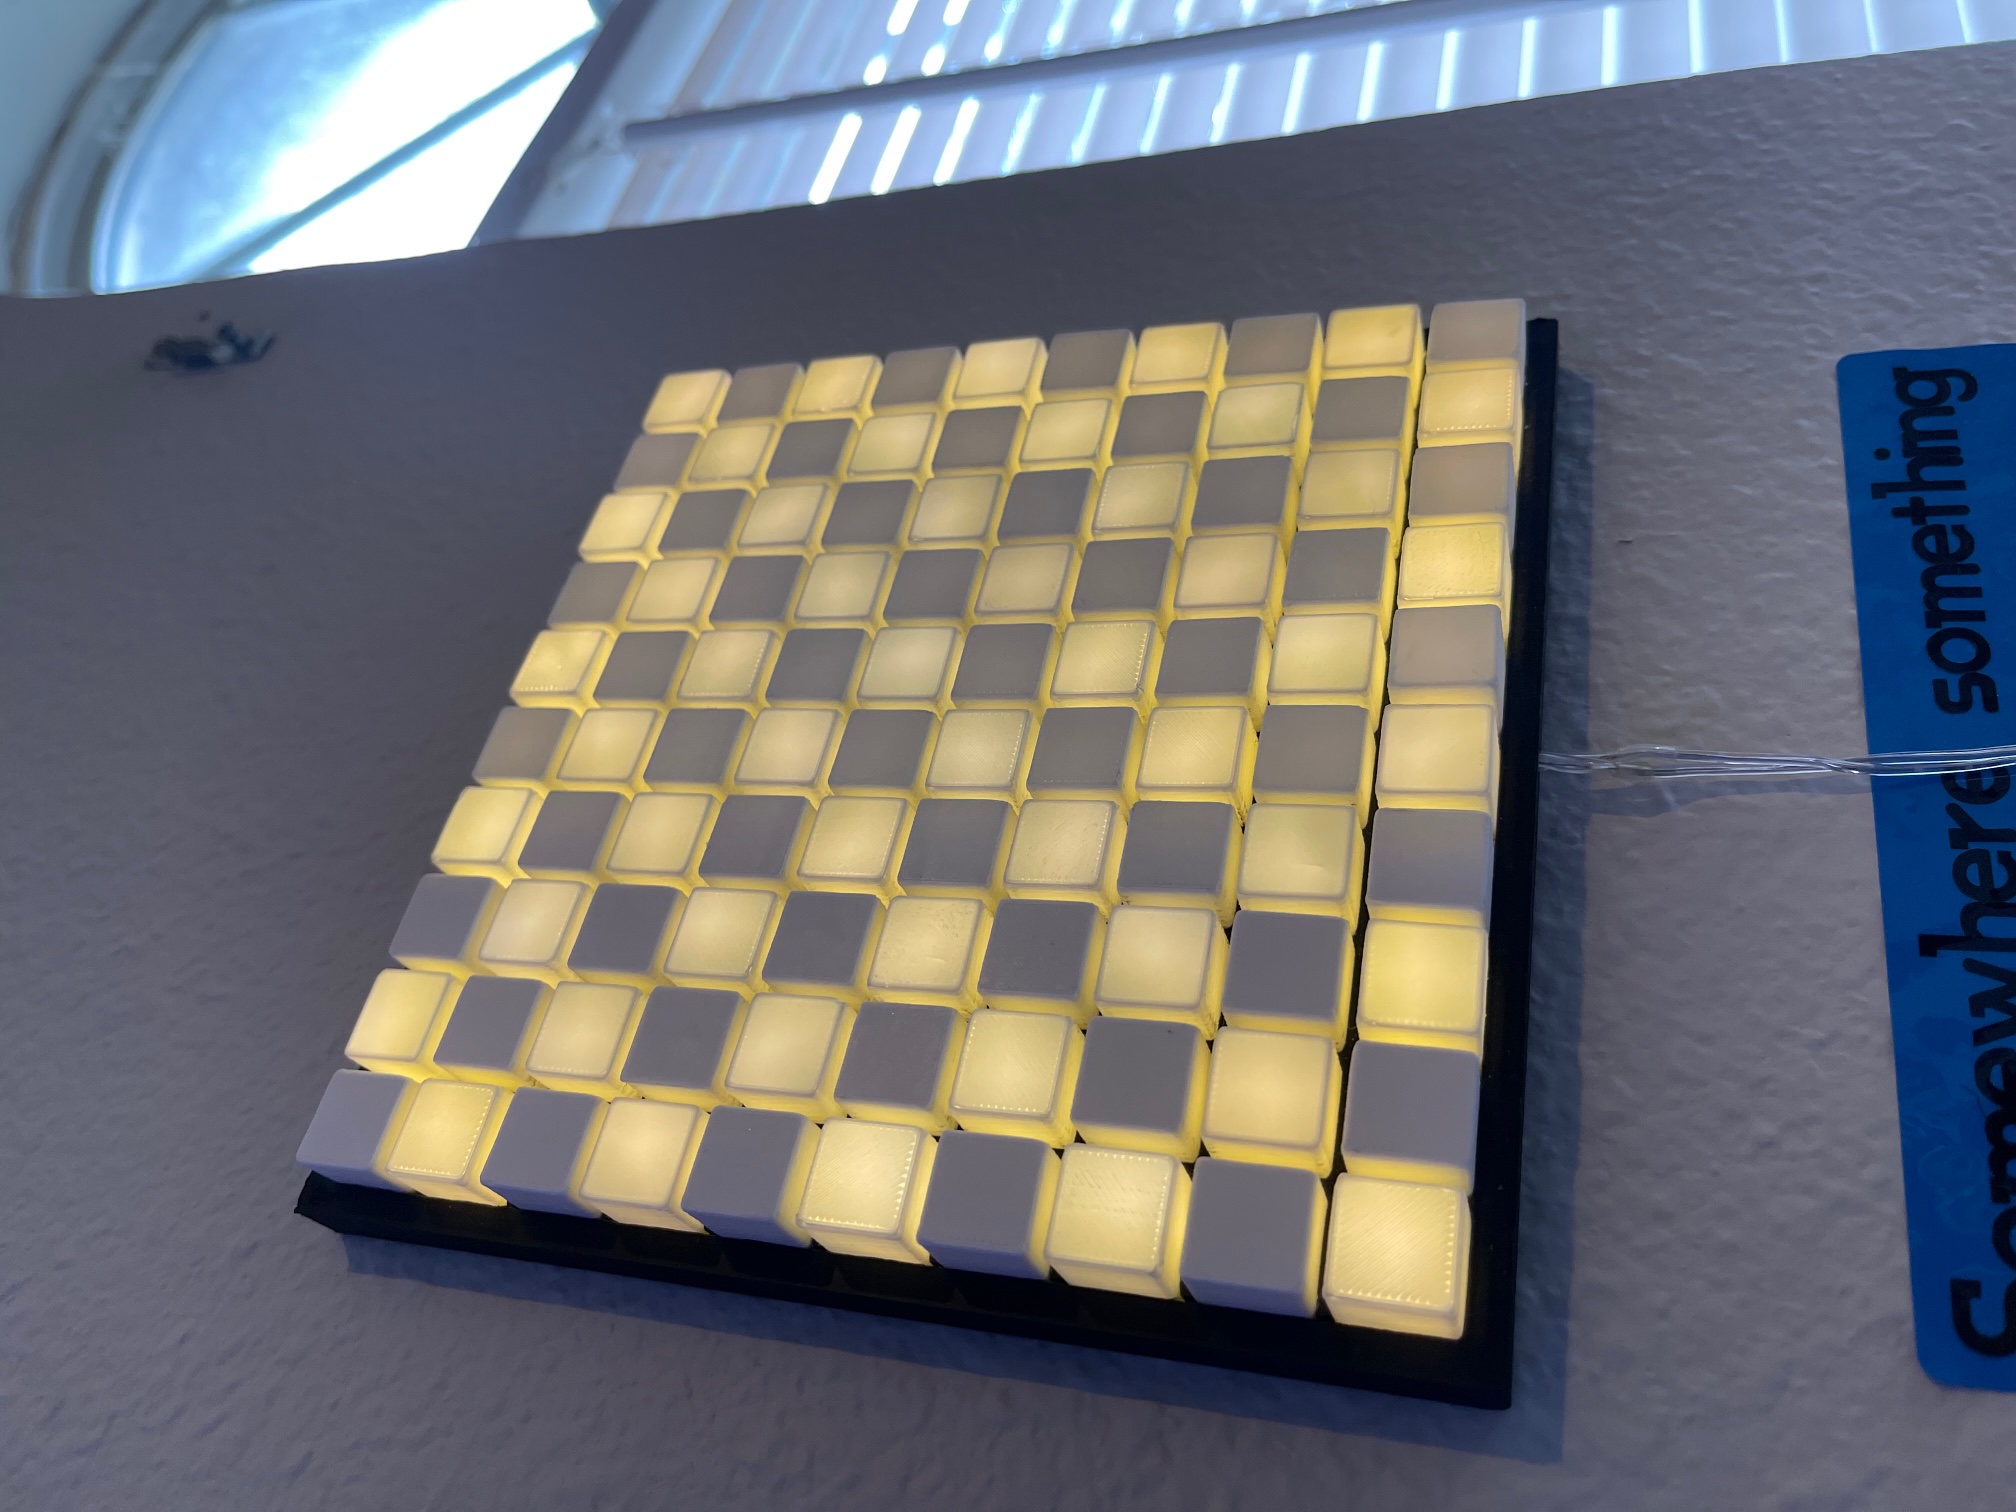 The Pixel Pixie (DIY fairy LED grid)